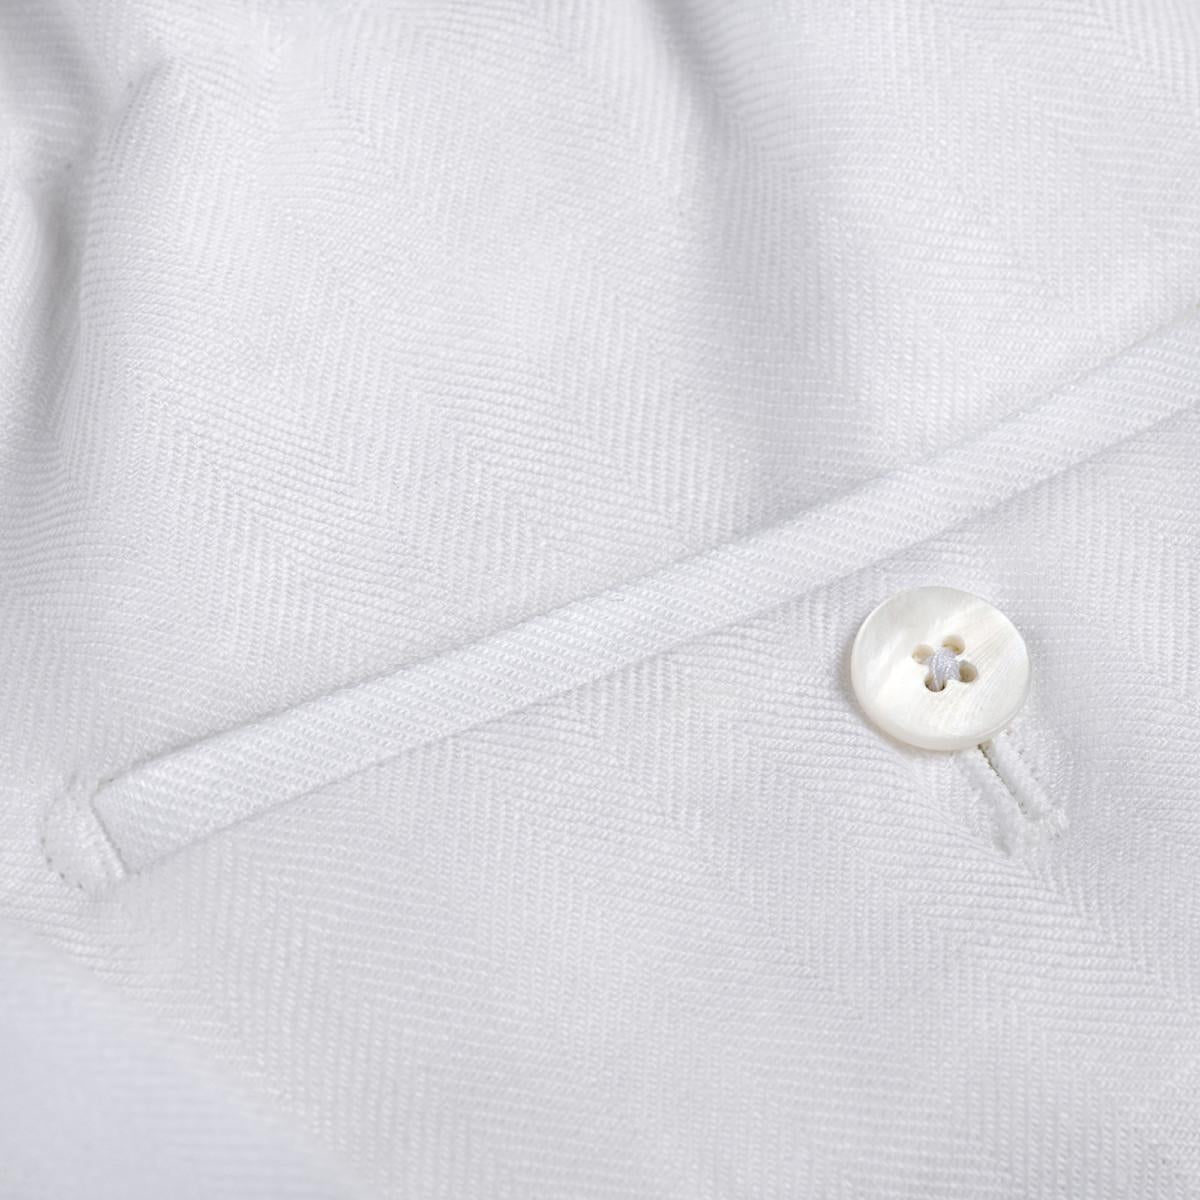 Pantalone Positano 100% Capri white linen trouser detail